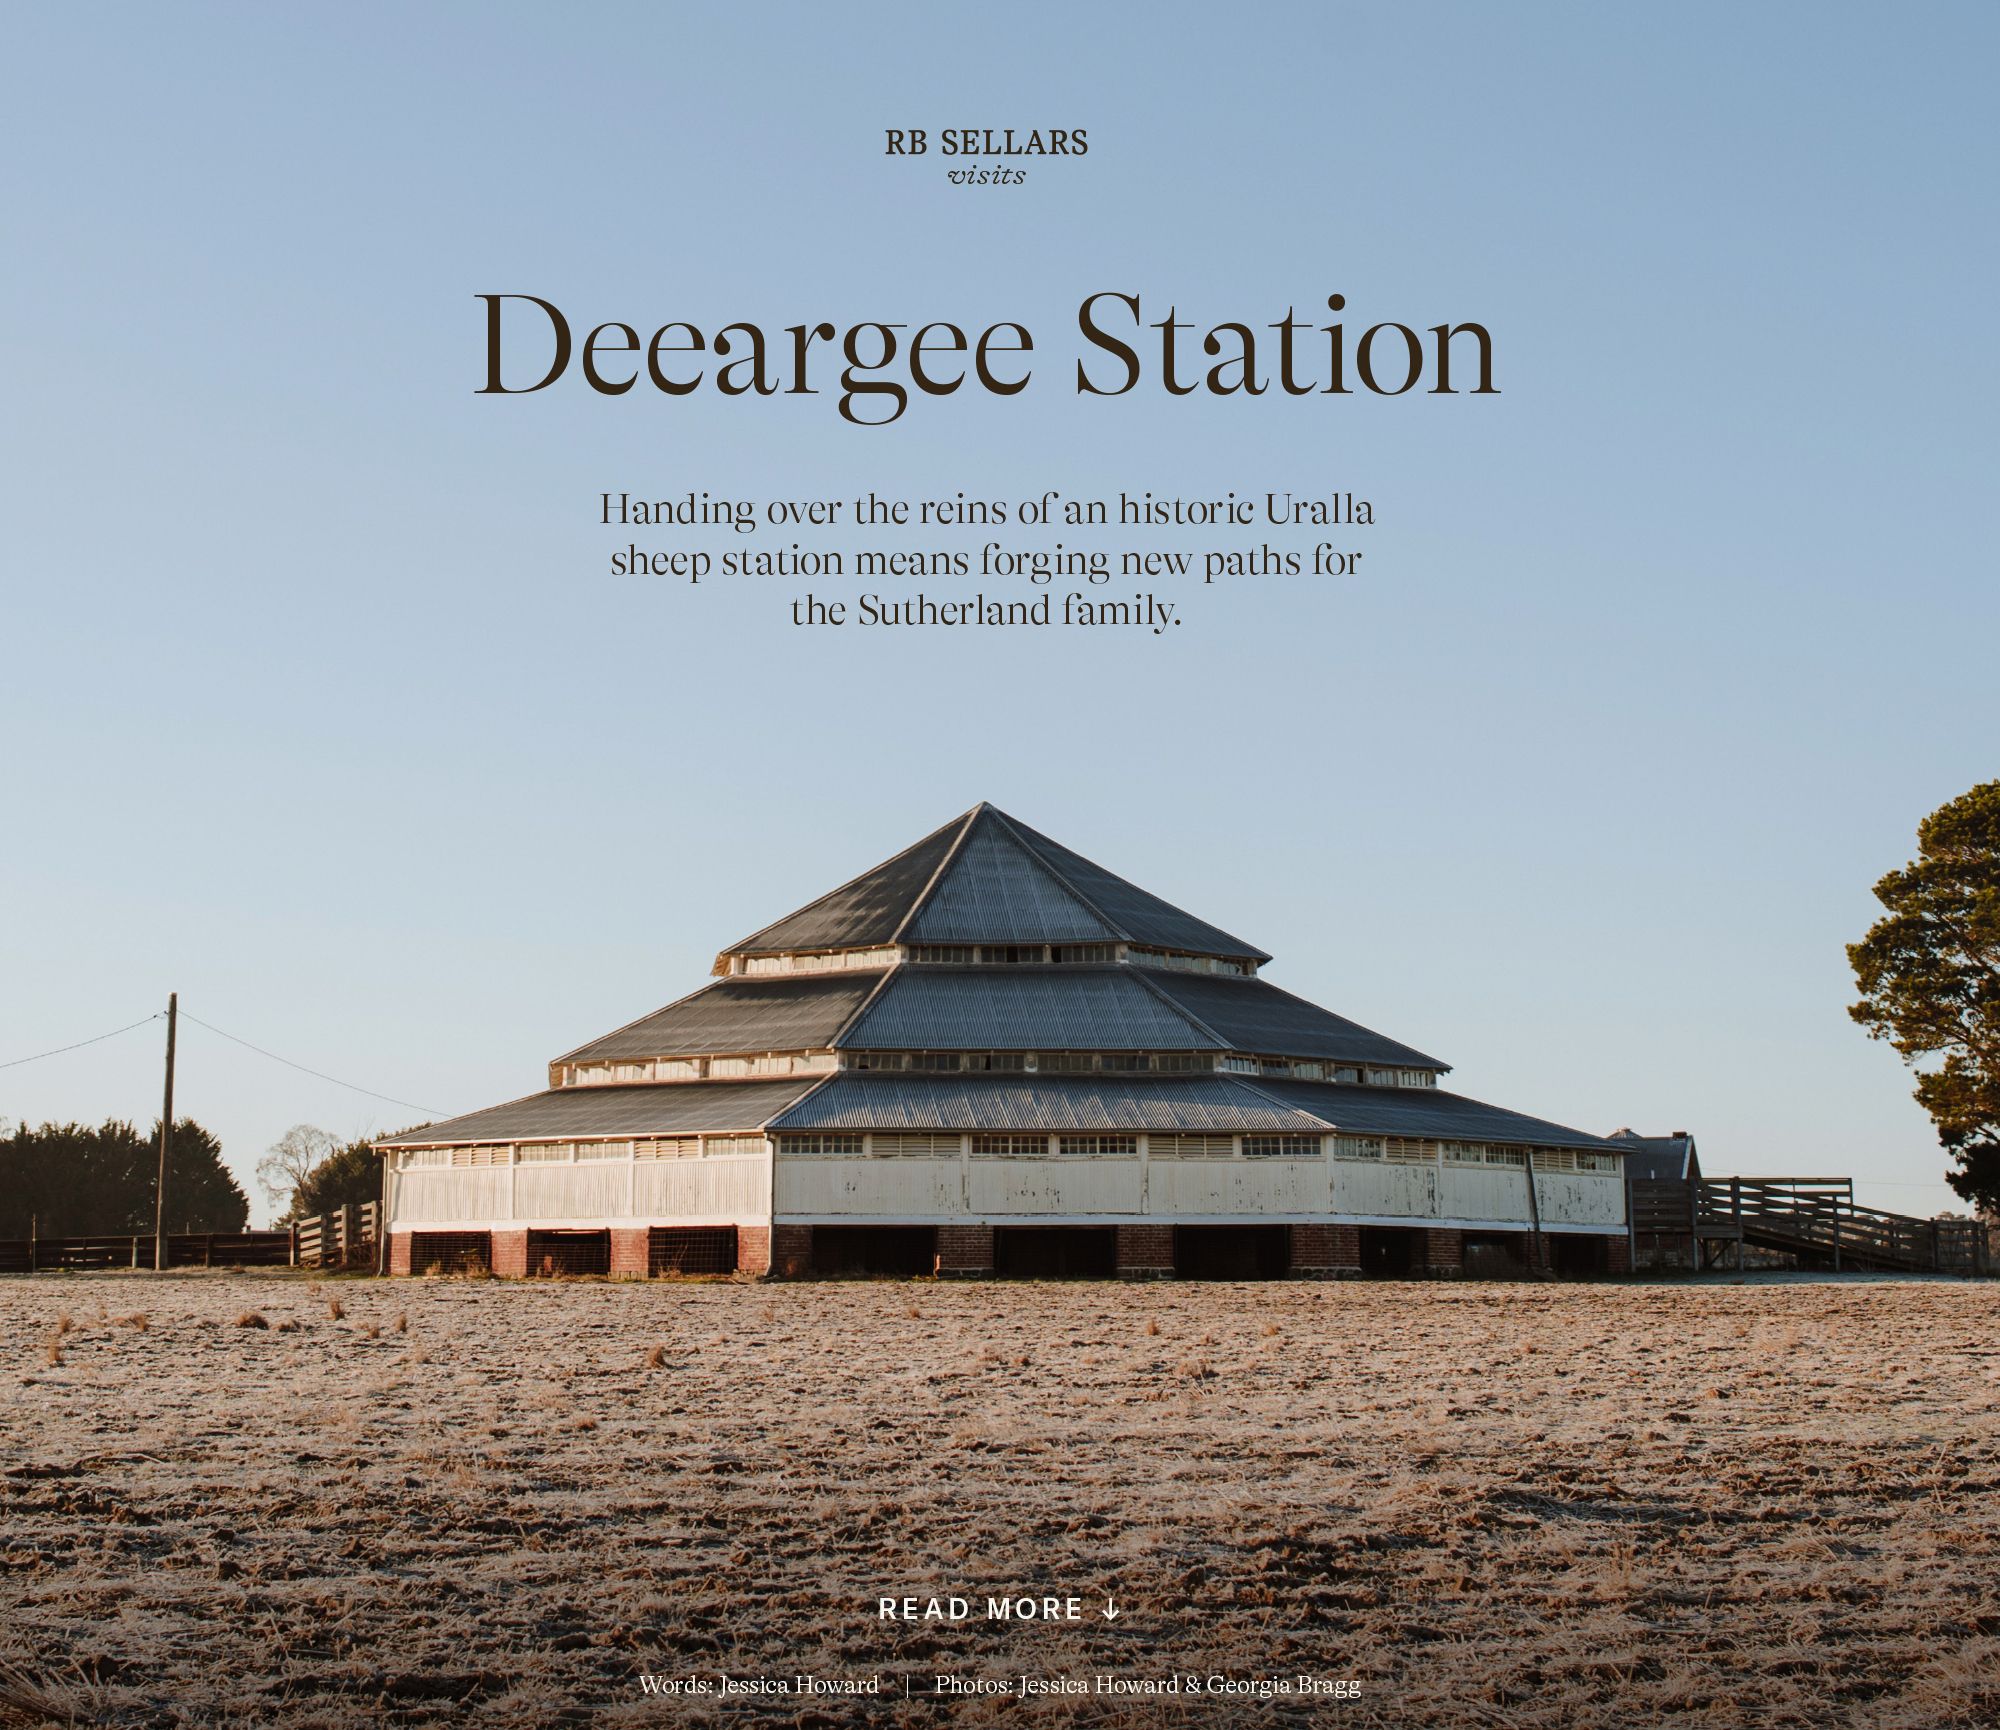 Deeargee Station